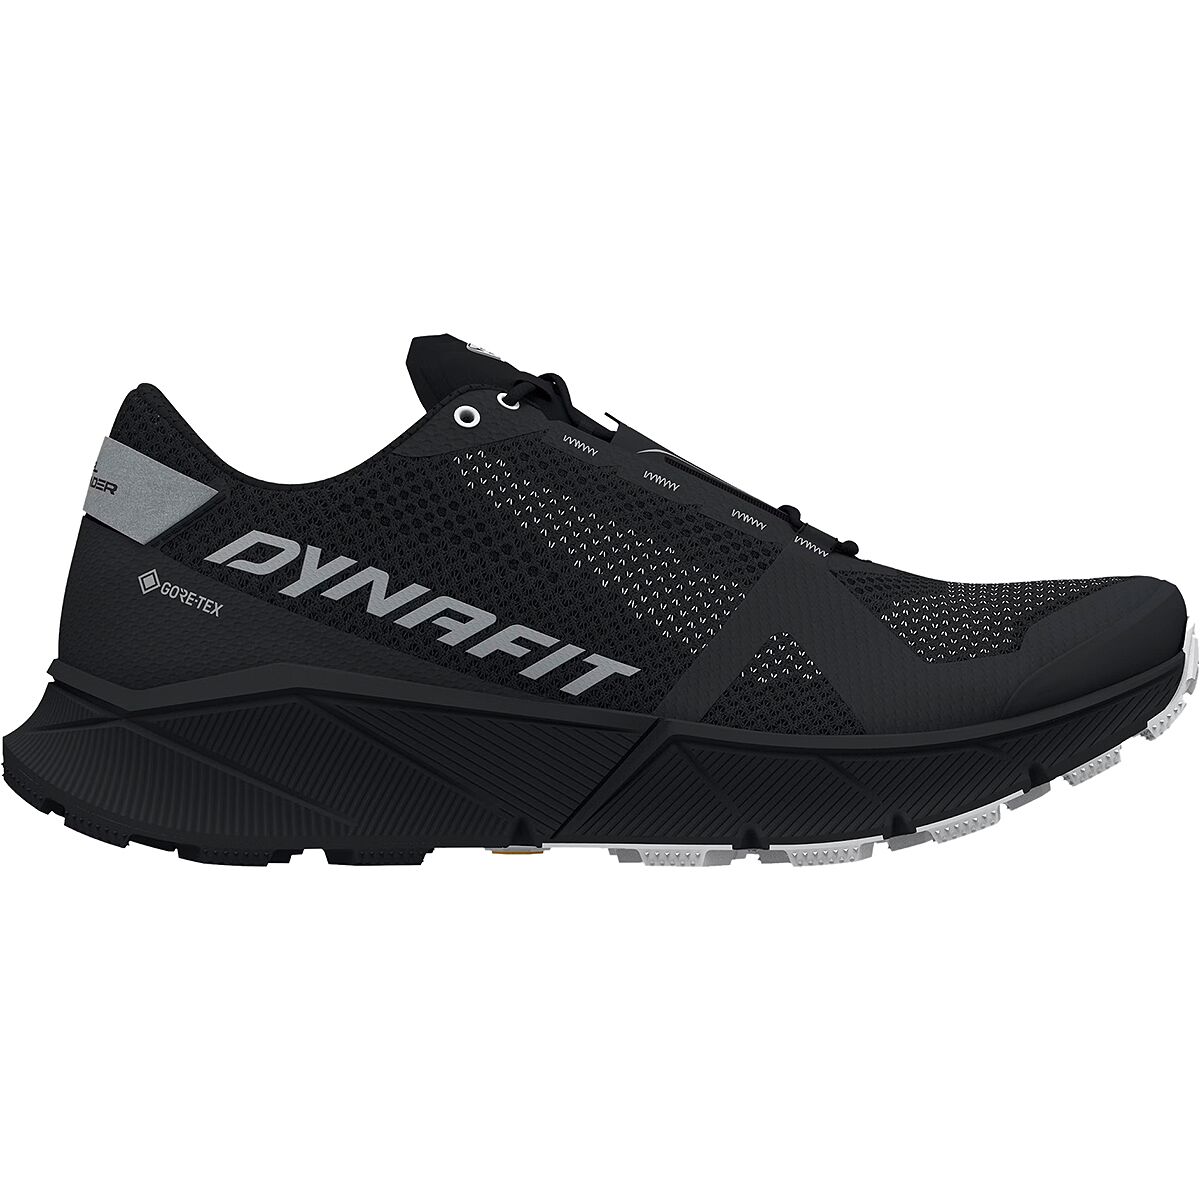 Dynafit Ultra 100 GTX Trail Running Shoe - Men's